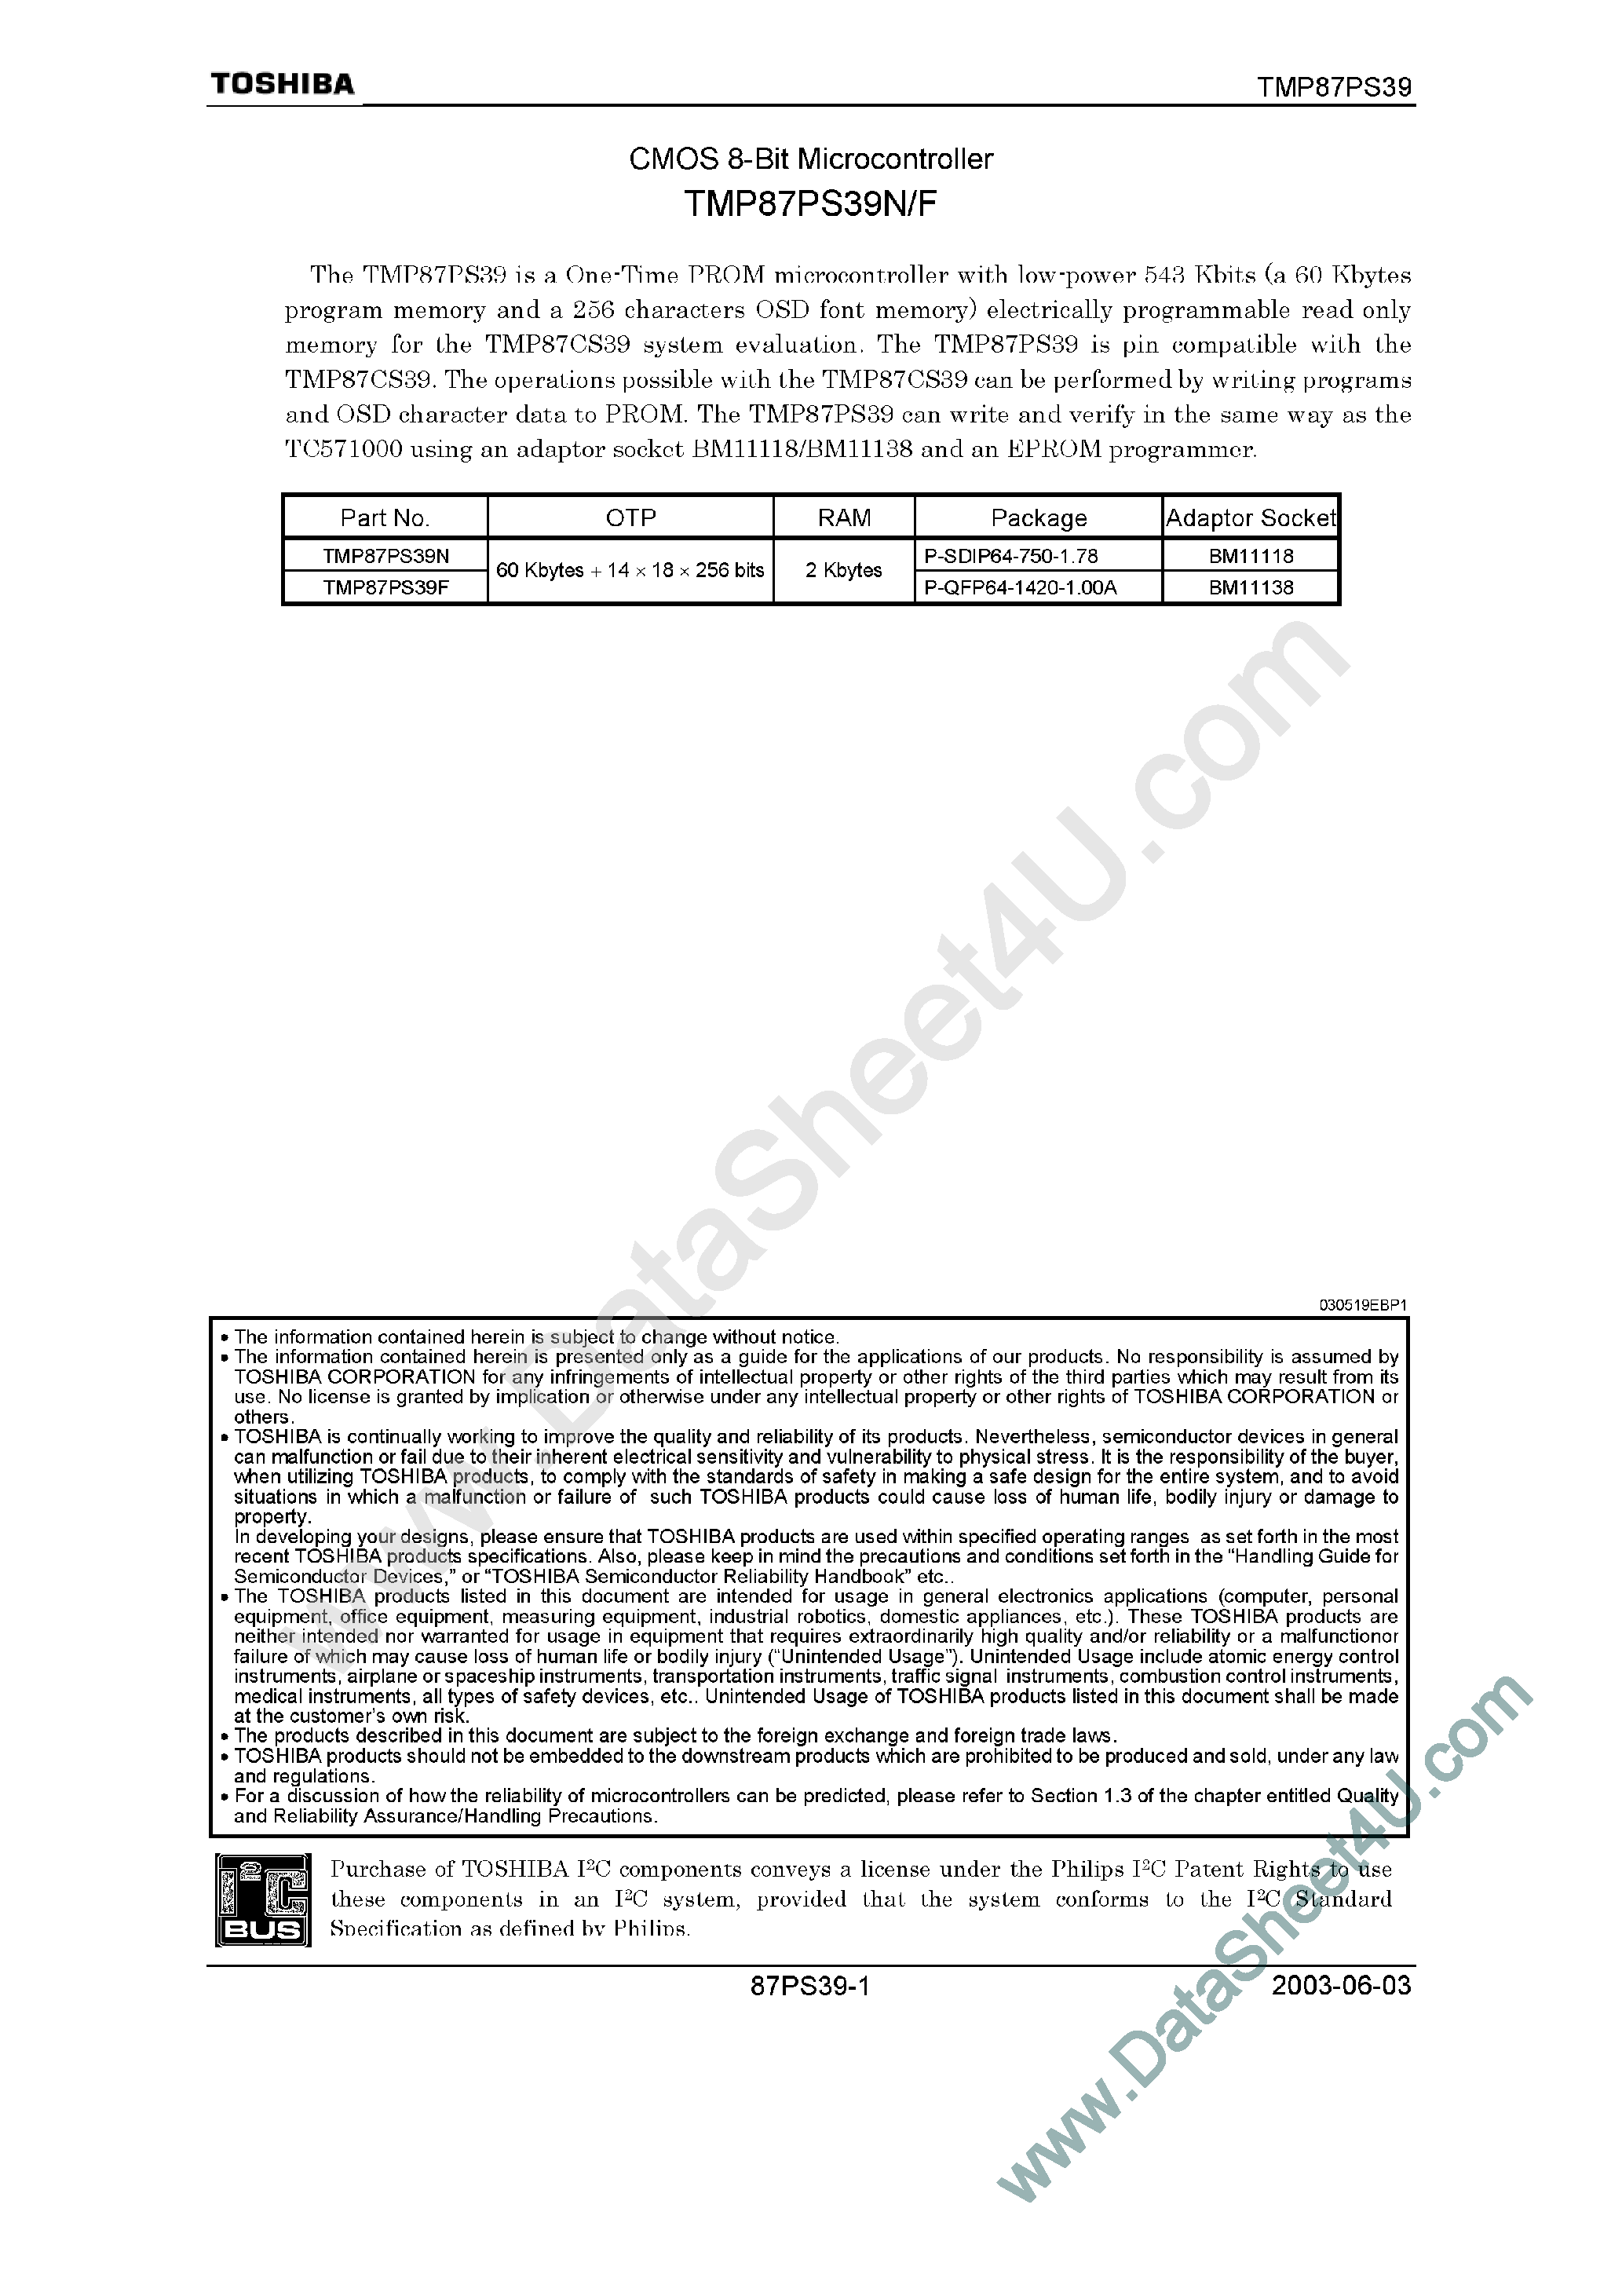 Datasheet TMP87PS39F - (TMP87PS39N/F) CMOS 8-Bit Microcontroller page 1